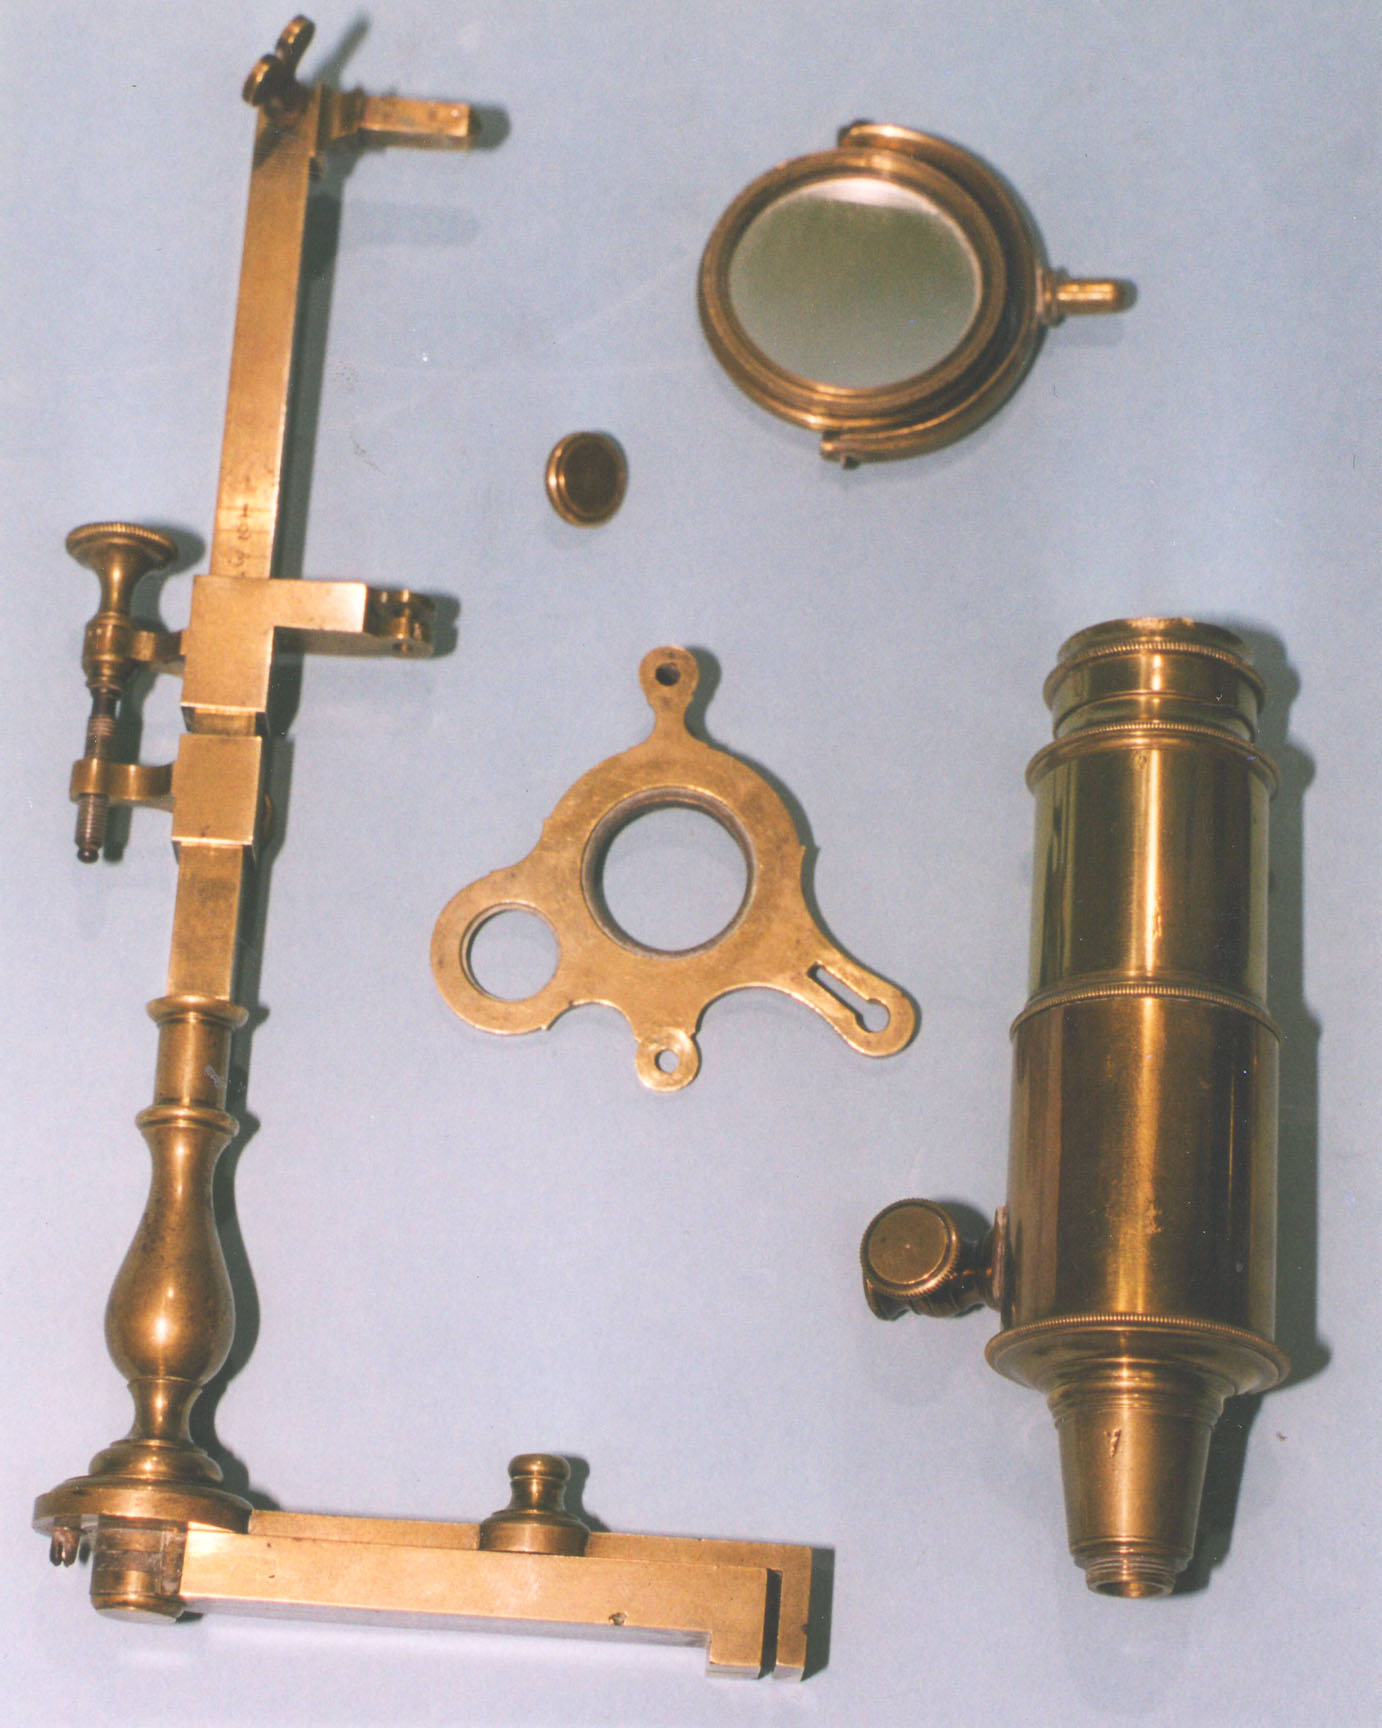  Parts of Martin Universal Microscope